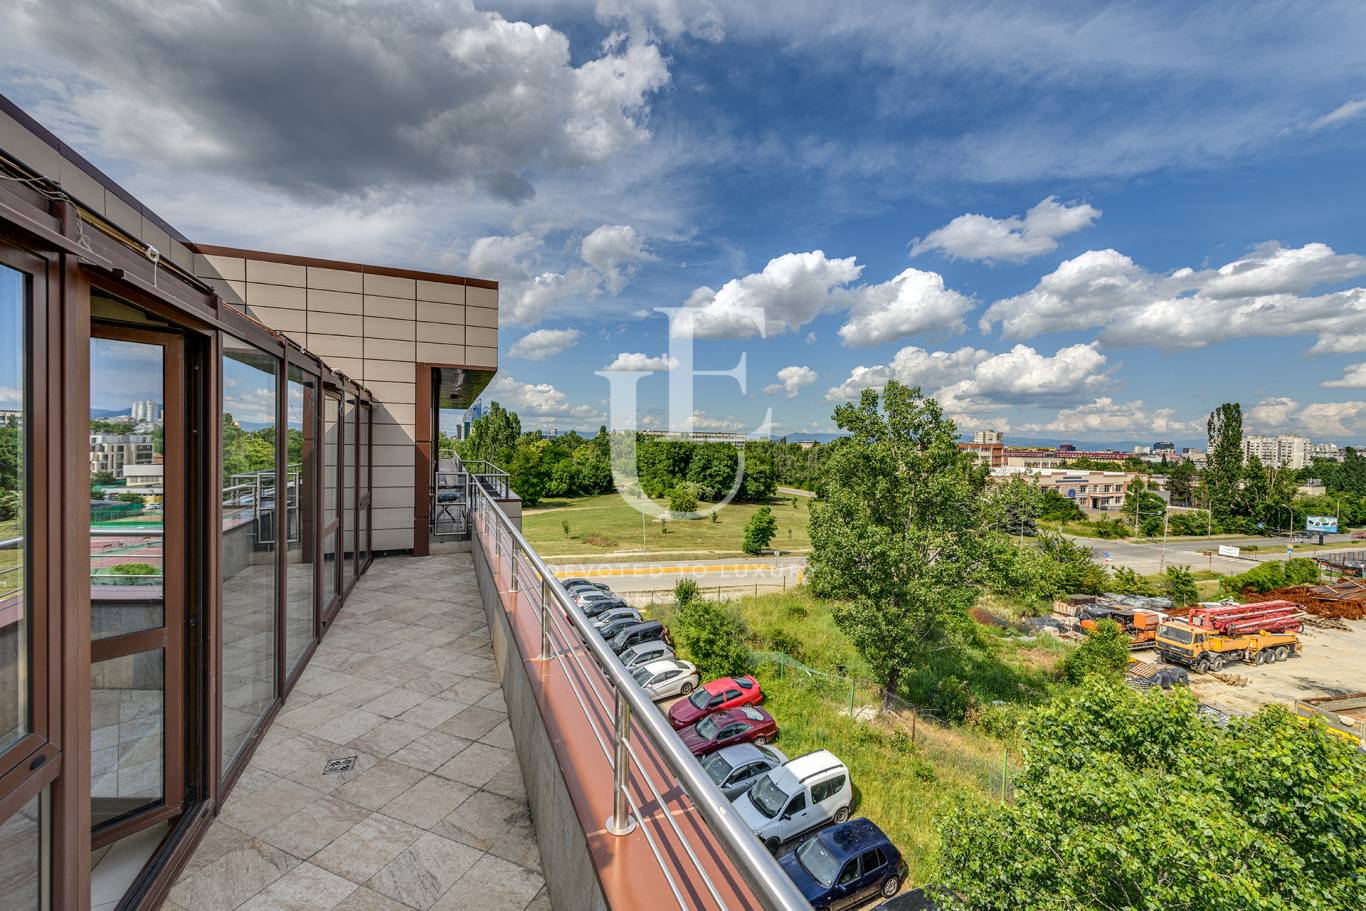 Офис под наем в София, Студентски град - код на имота: K17700 - image 1